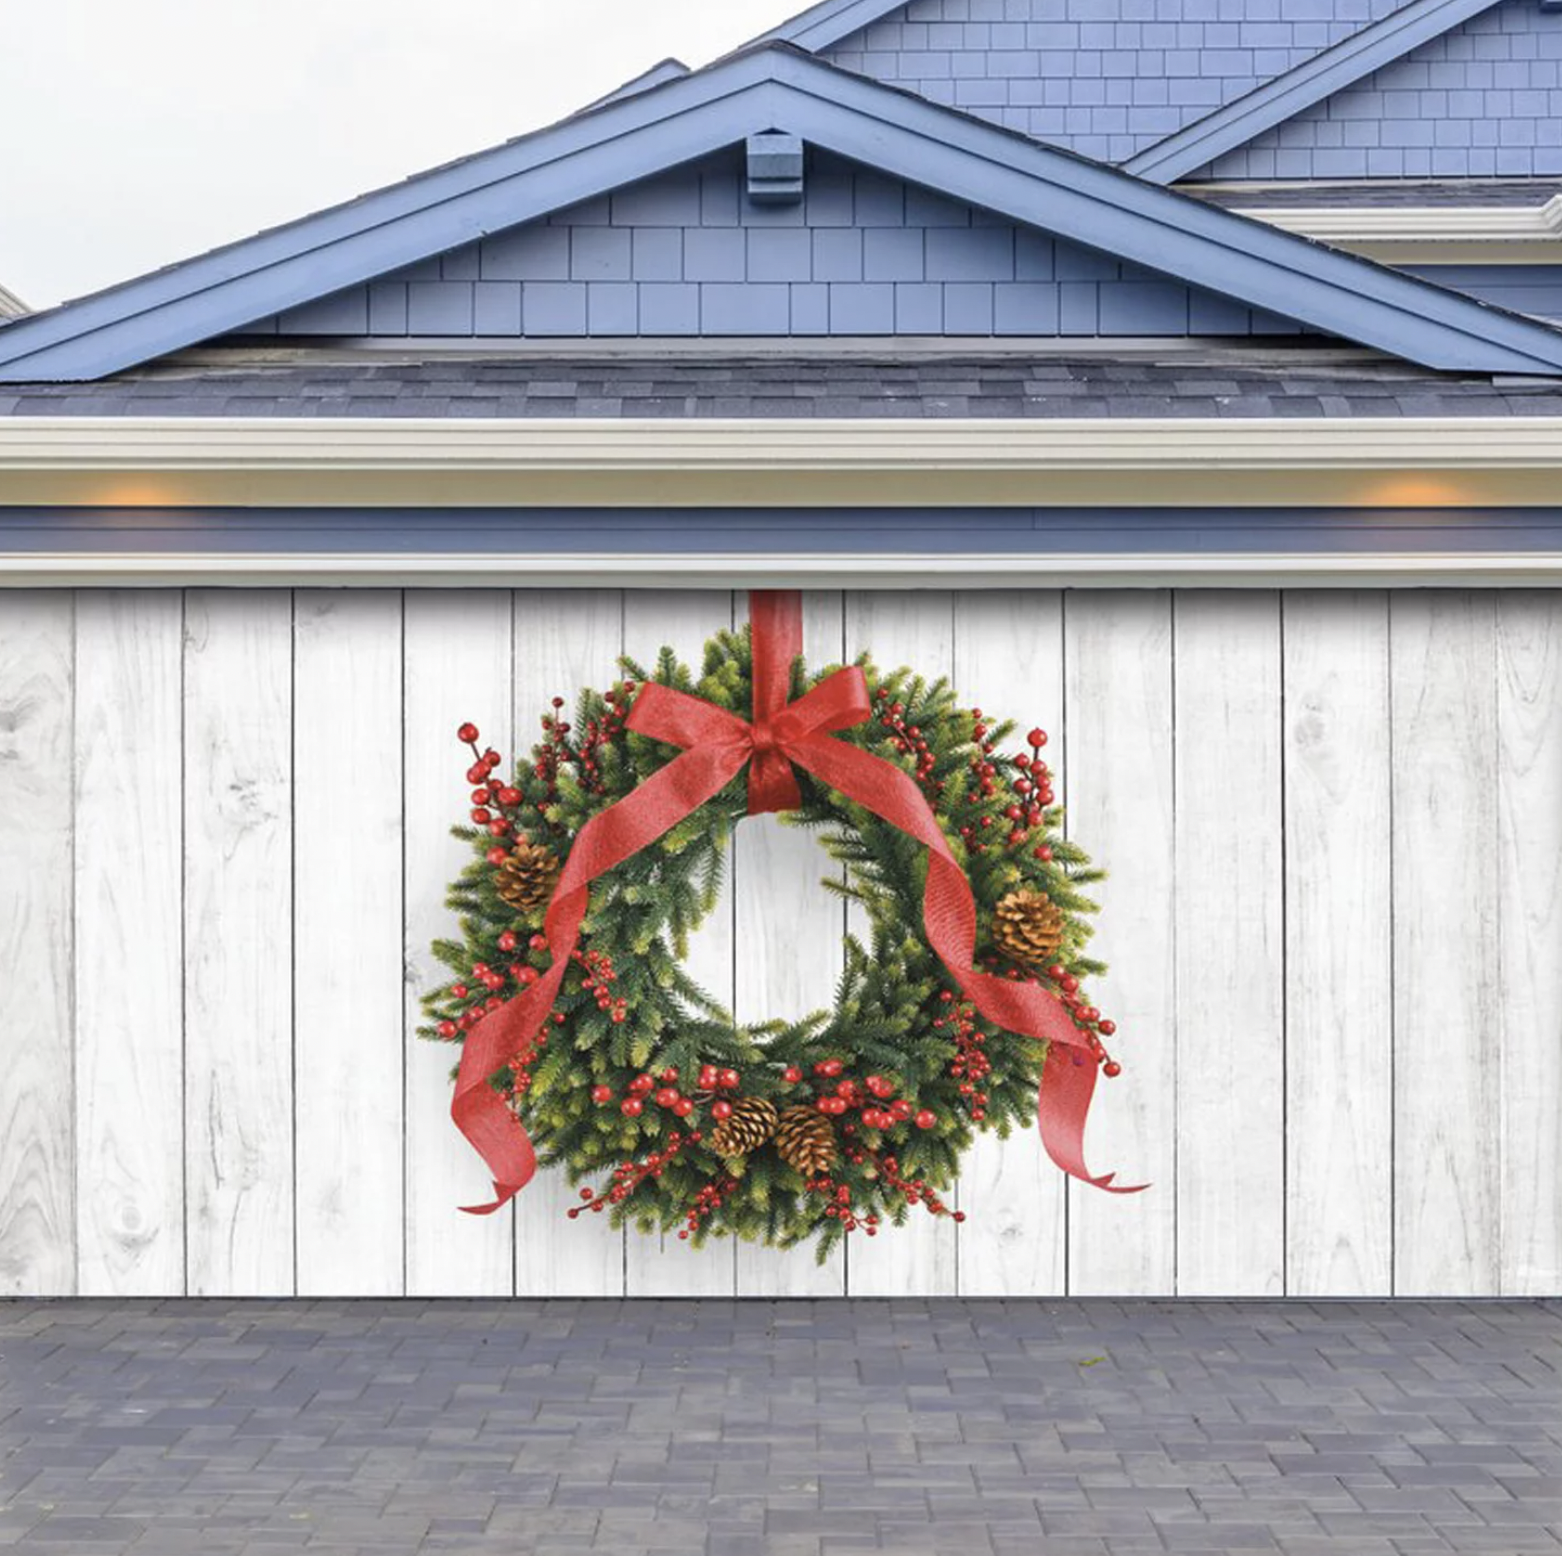 10 Christmas Garage Door Decorations for Your Home: Top Picks